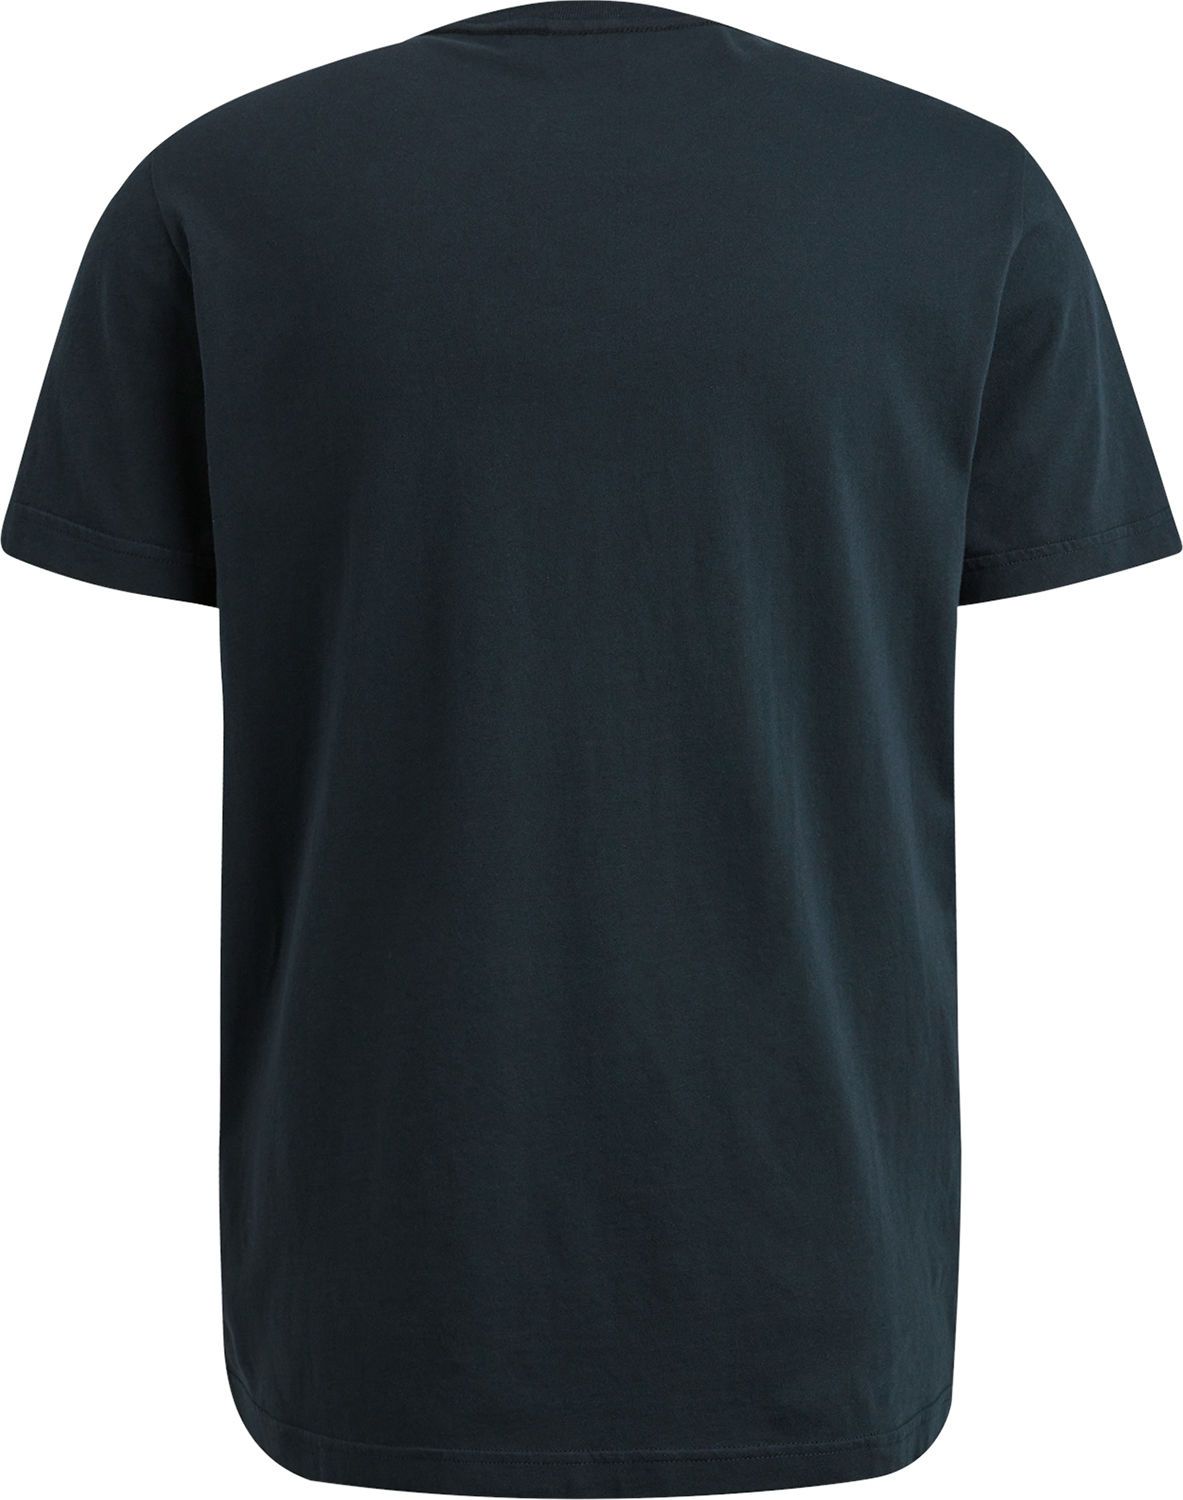 Pme Legend T-shirt Donkerblauw